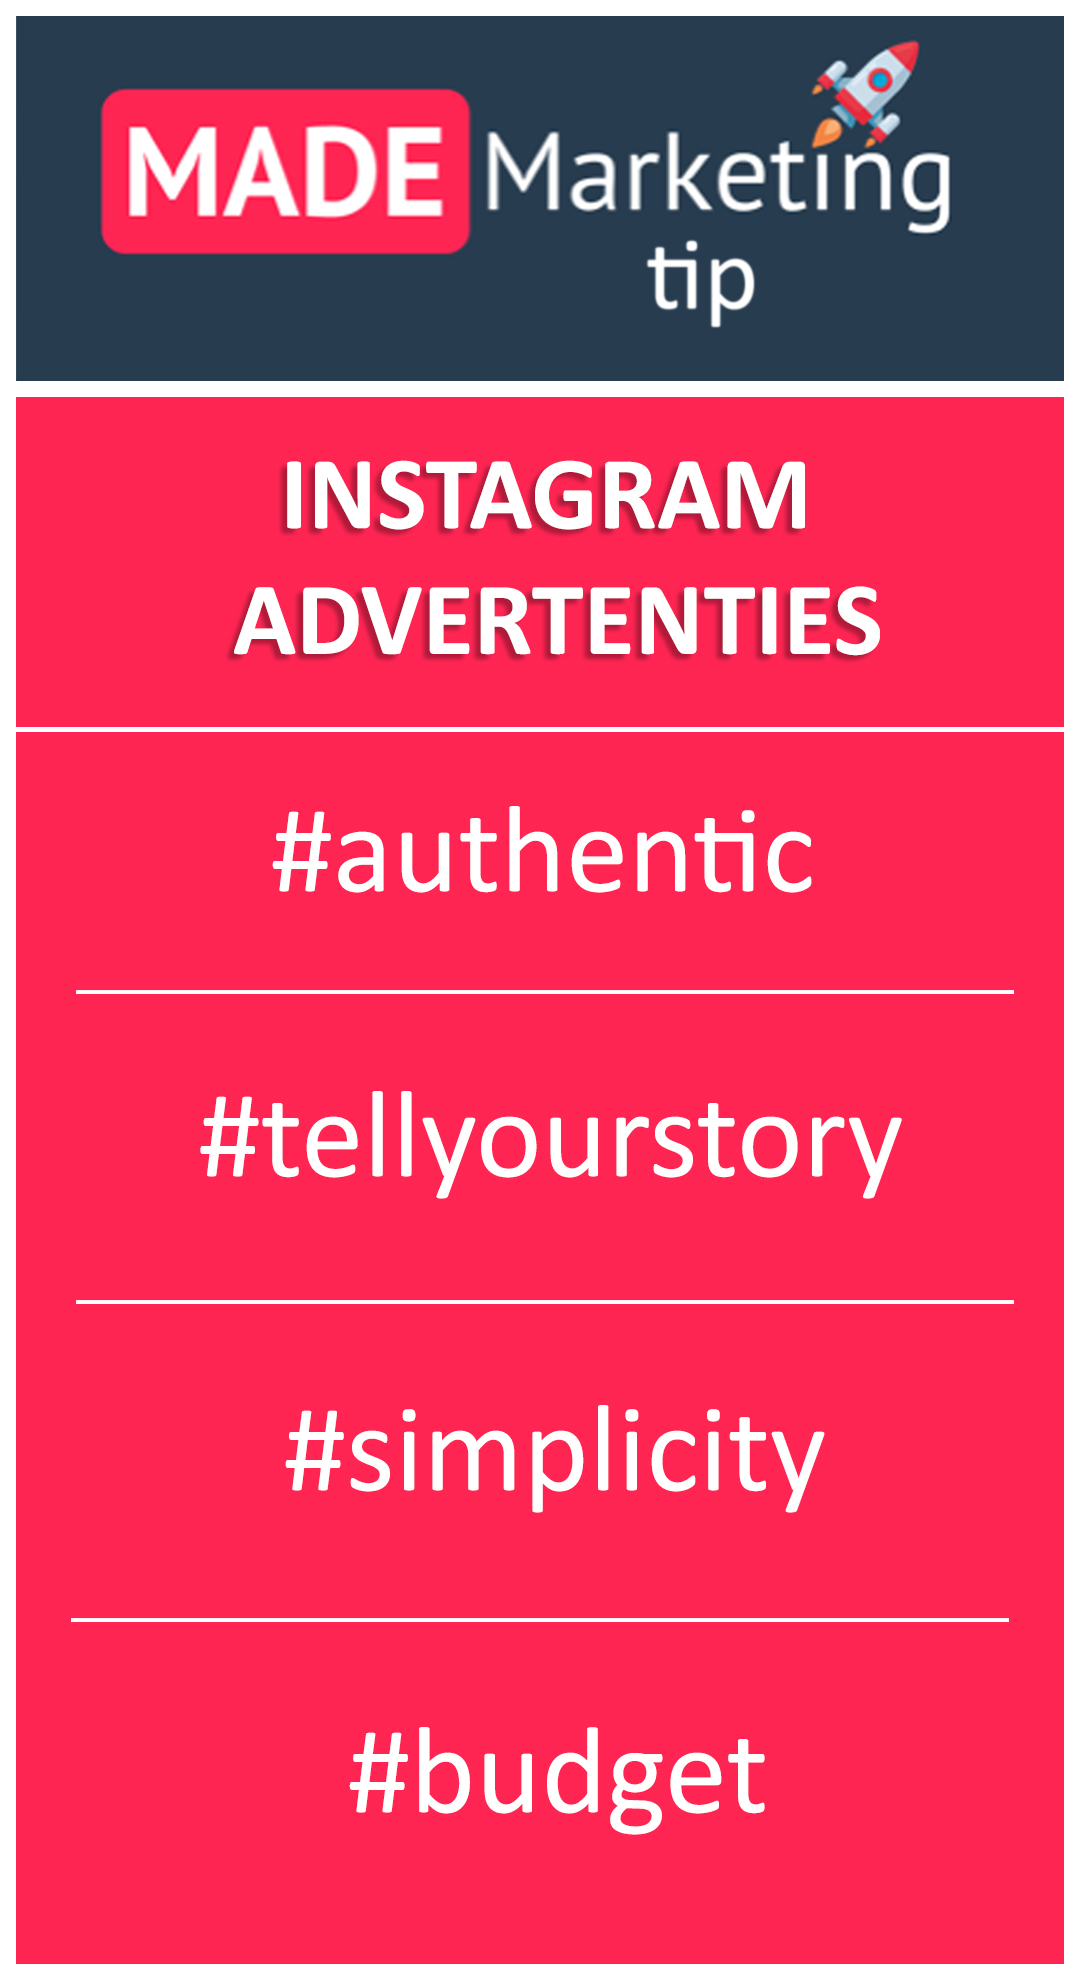 Instagram-advertenties-MADE-marketing-mademarketing